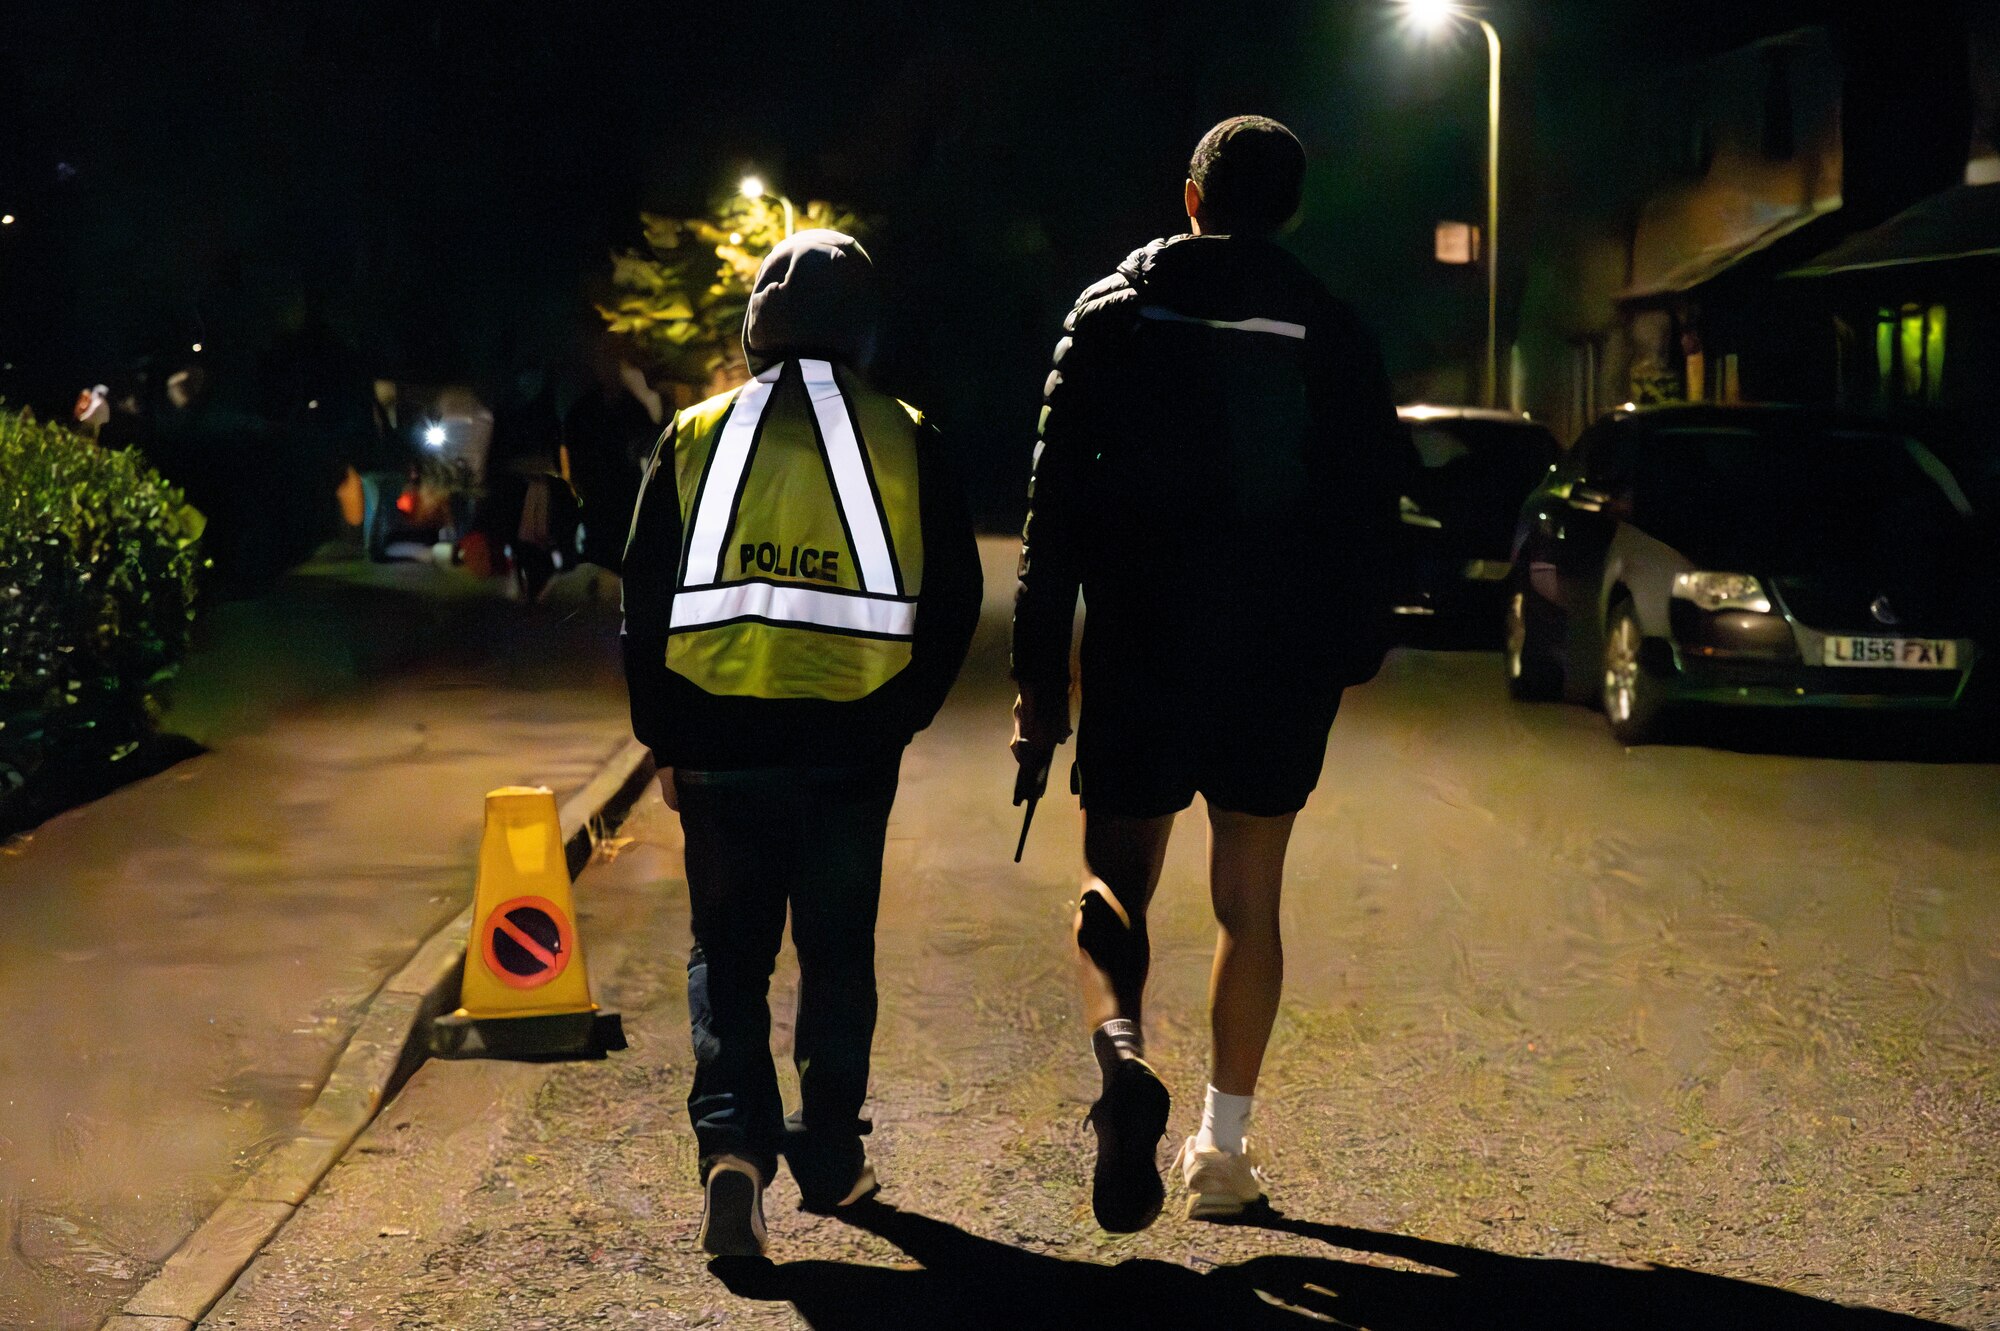 Security volunteers walk down a street at night